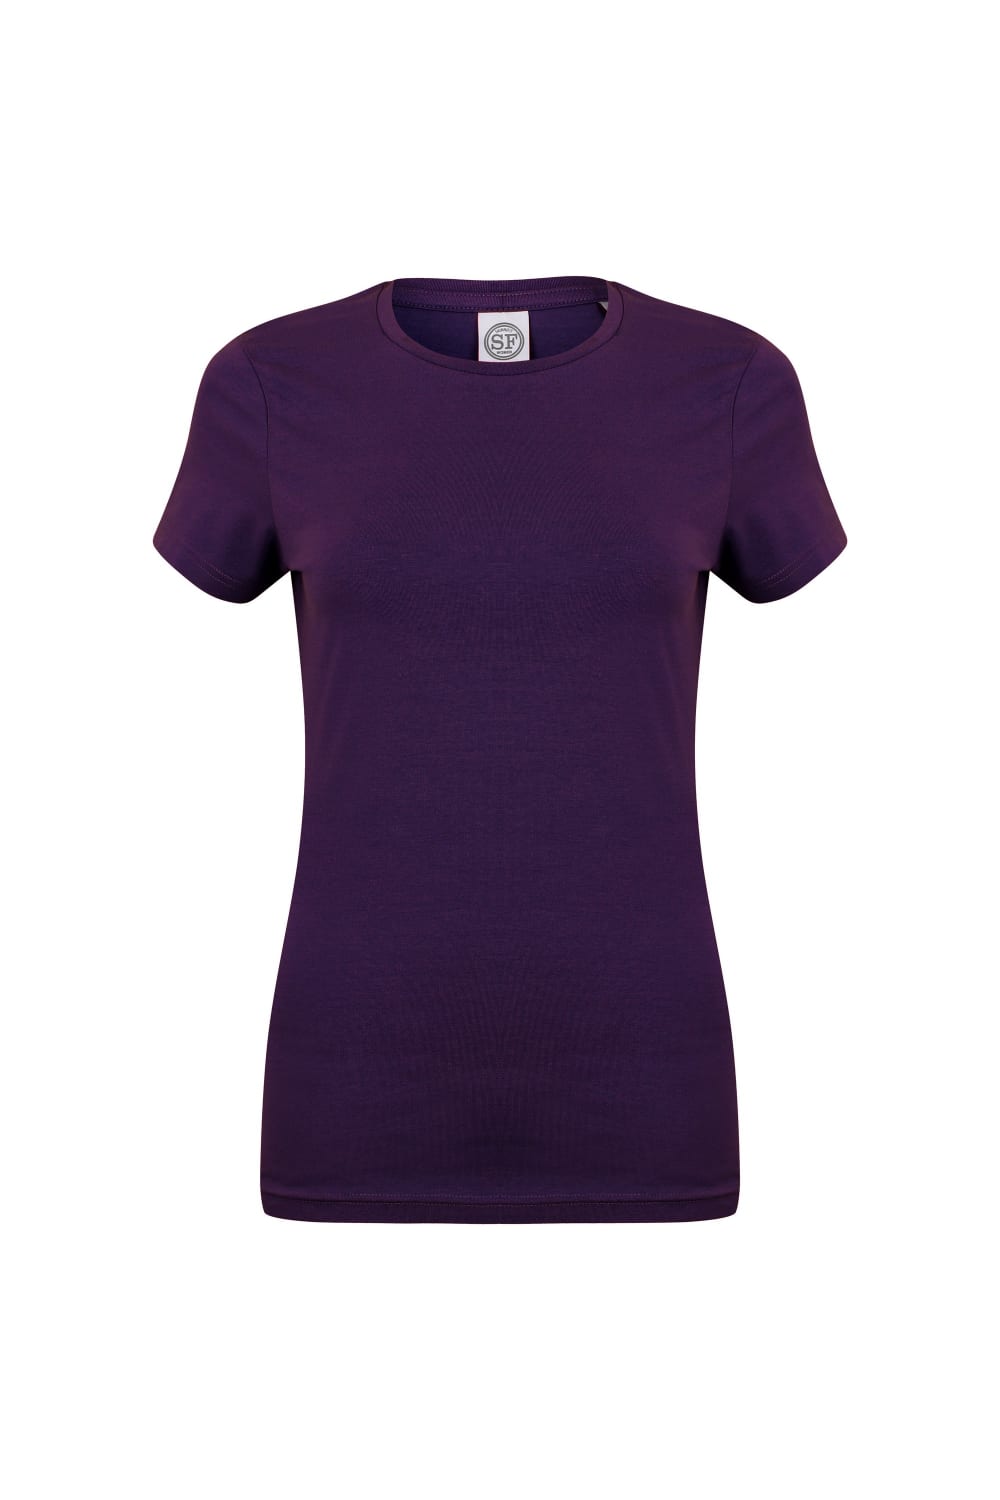 Skinni Fit Womens/Ladies Feel Good Stretch Short Sleeve T-Shirt (Deep Purple)